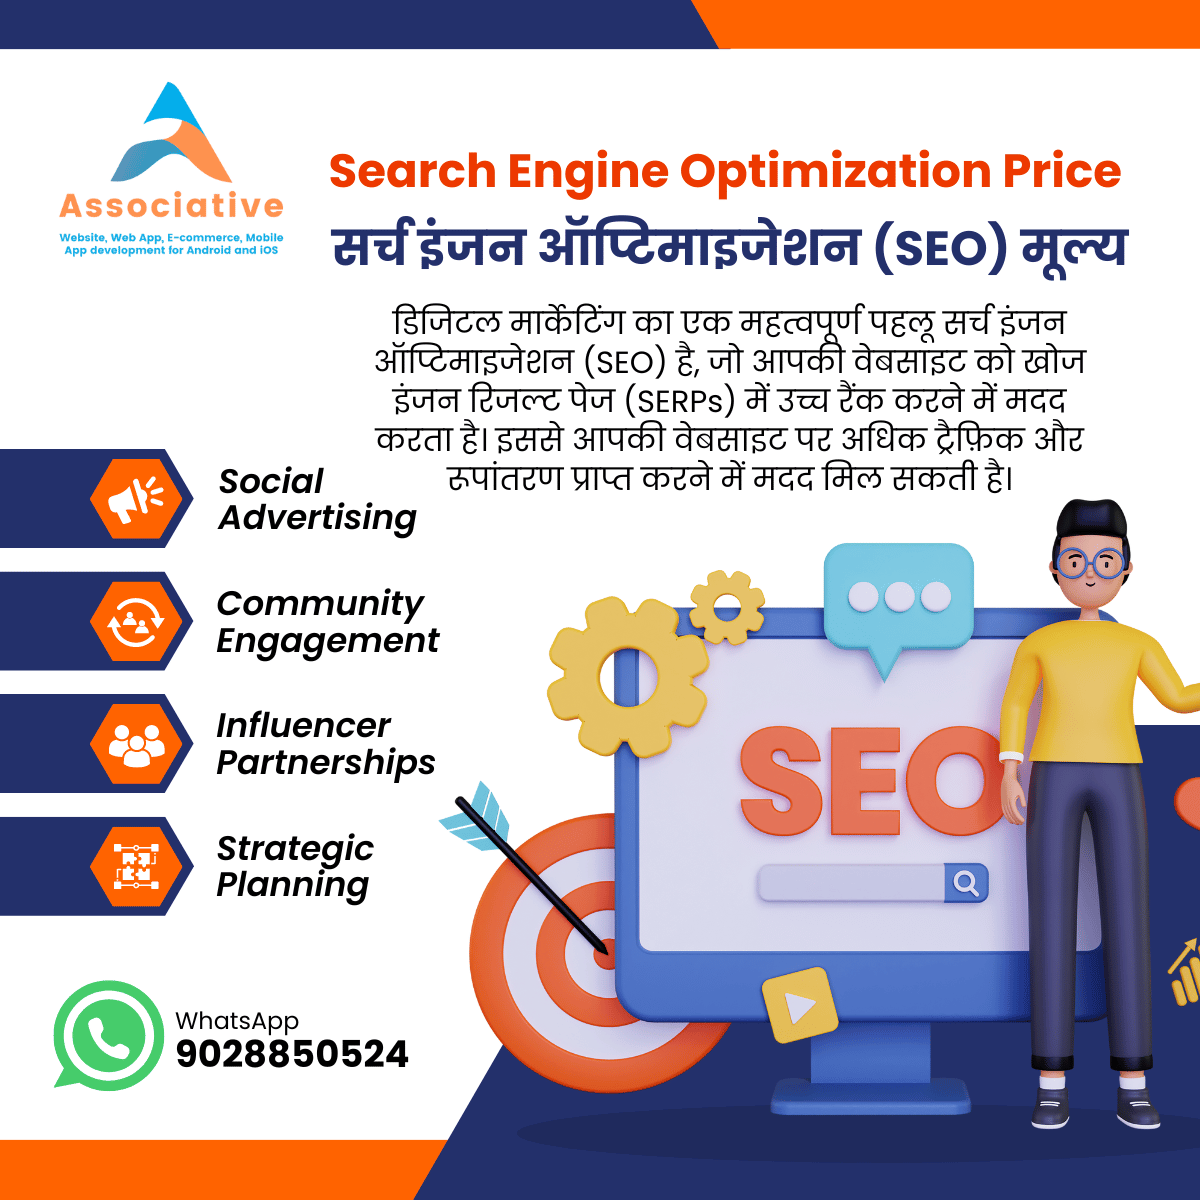 Search Engine Optimization (SEO) Price